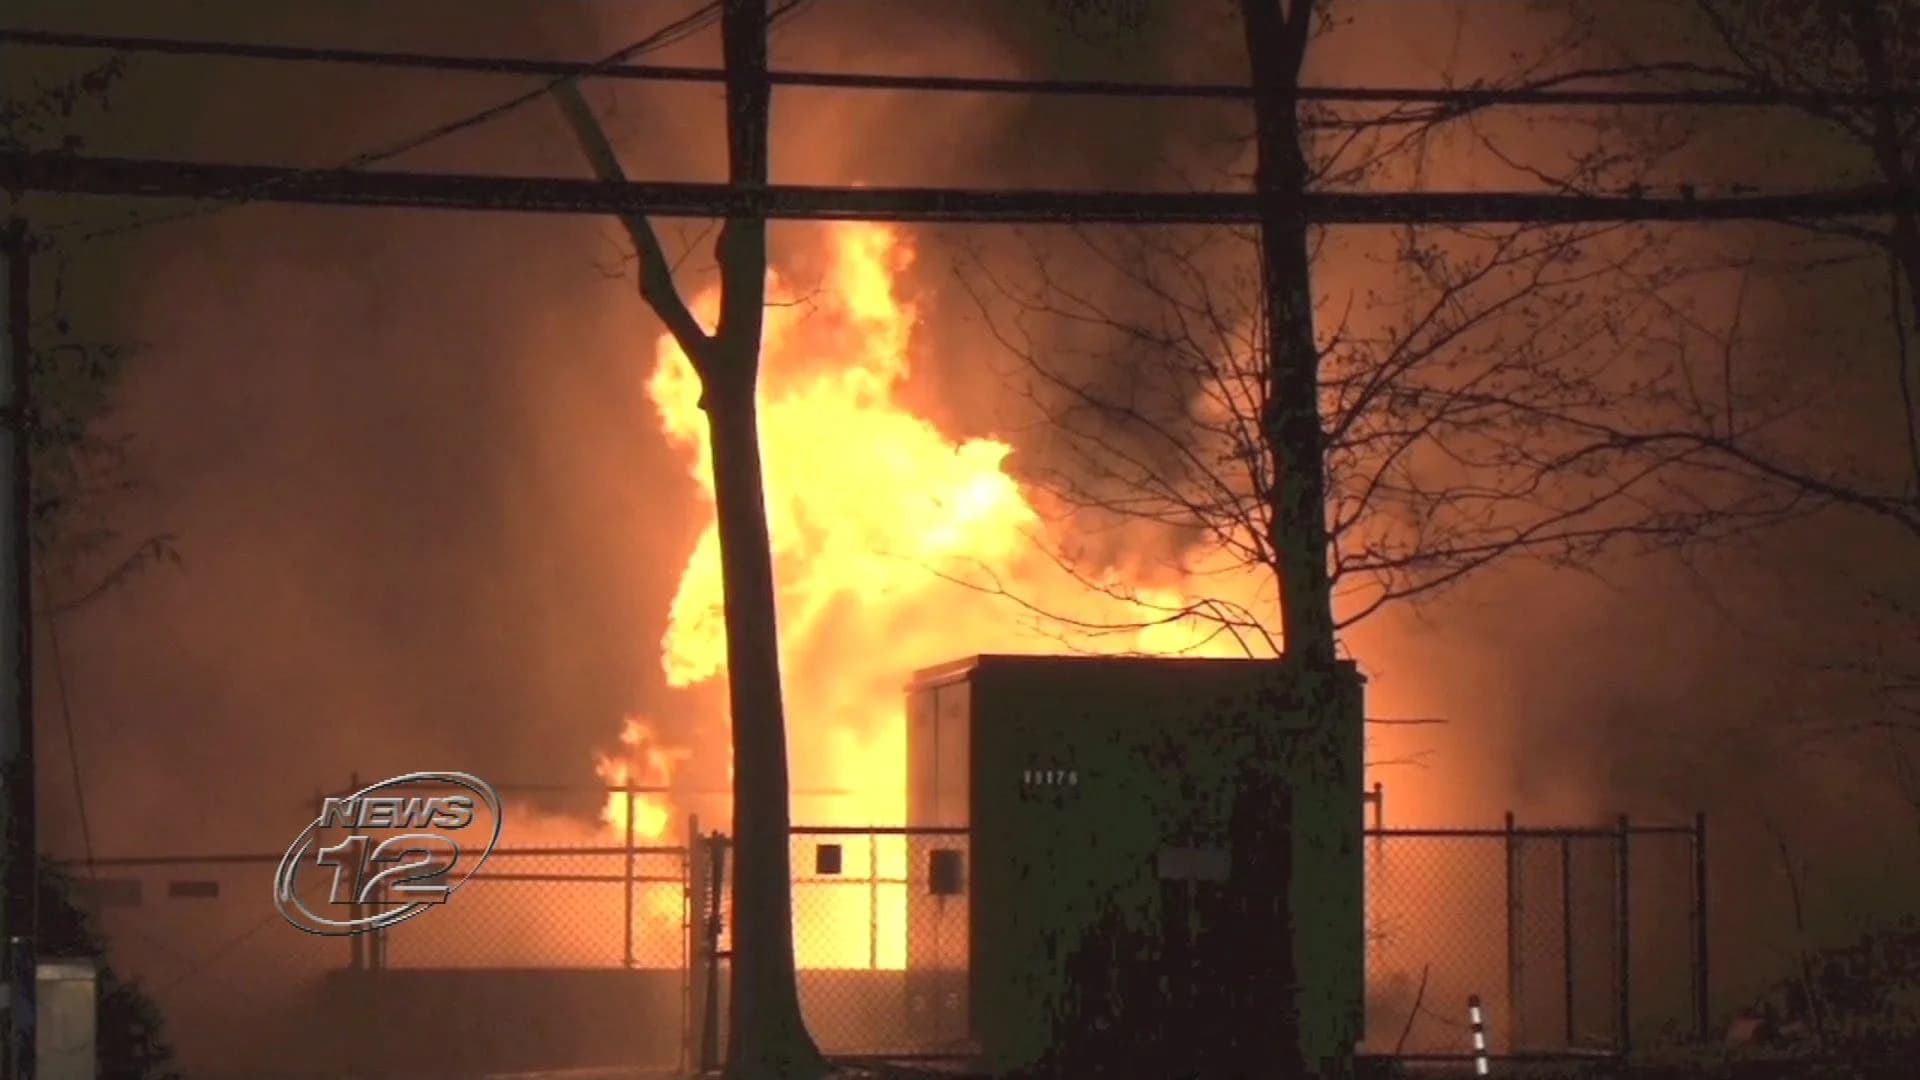 Transformer fire knocks out power for hundreds